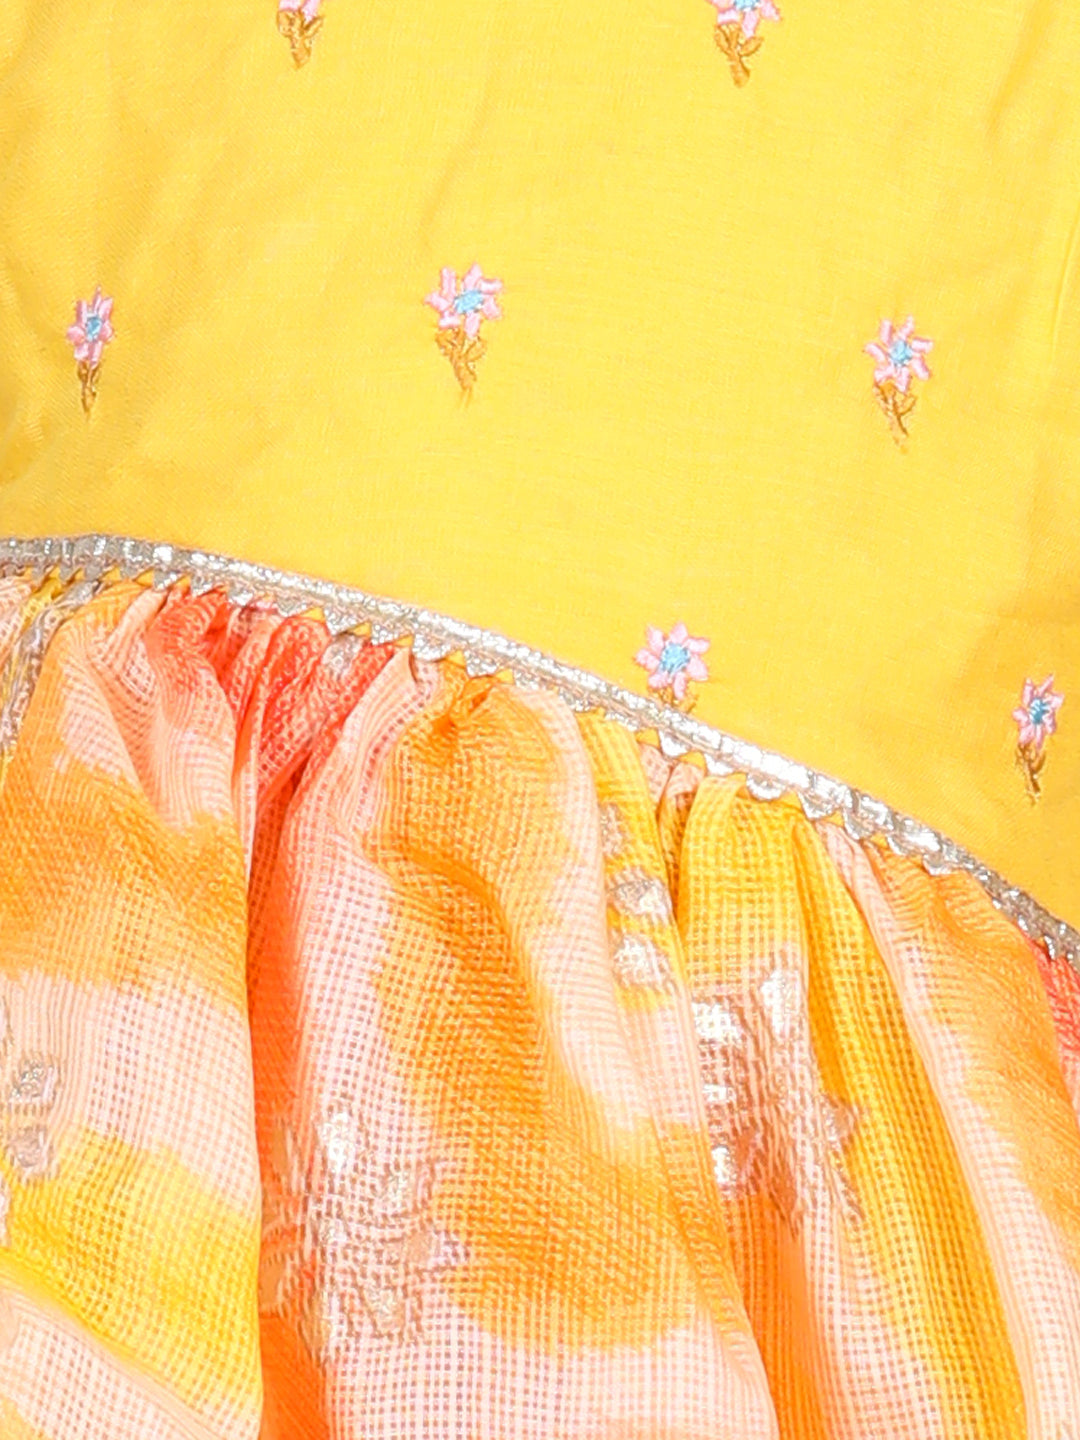 Kinder Kids Sleeveless Dress With Embroidered Yoke Detail - Yellow